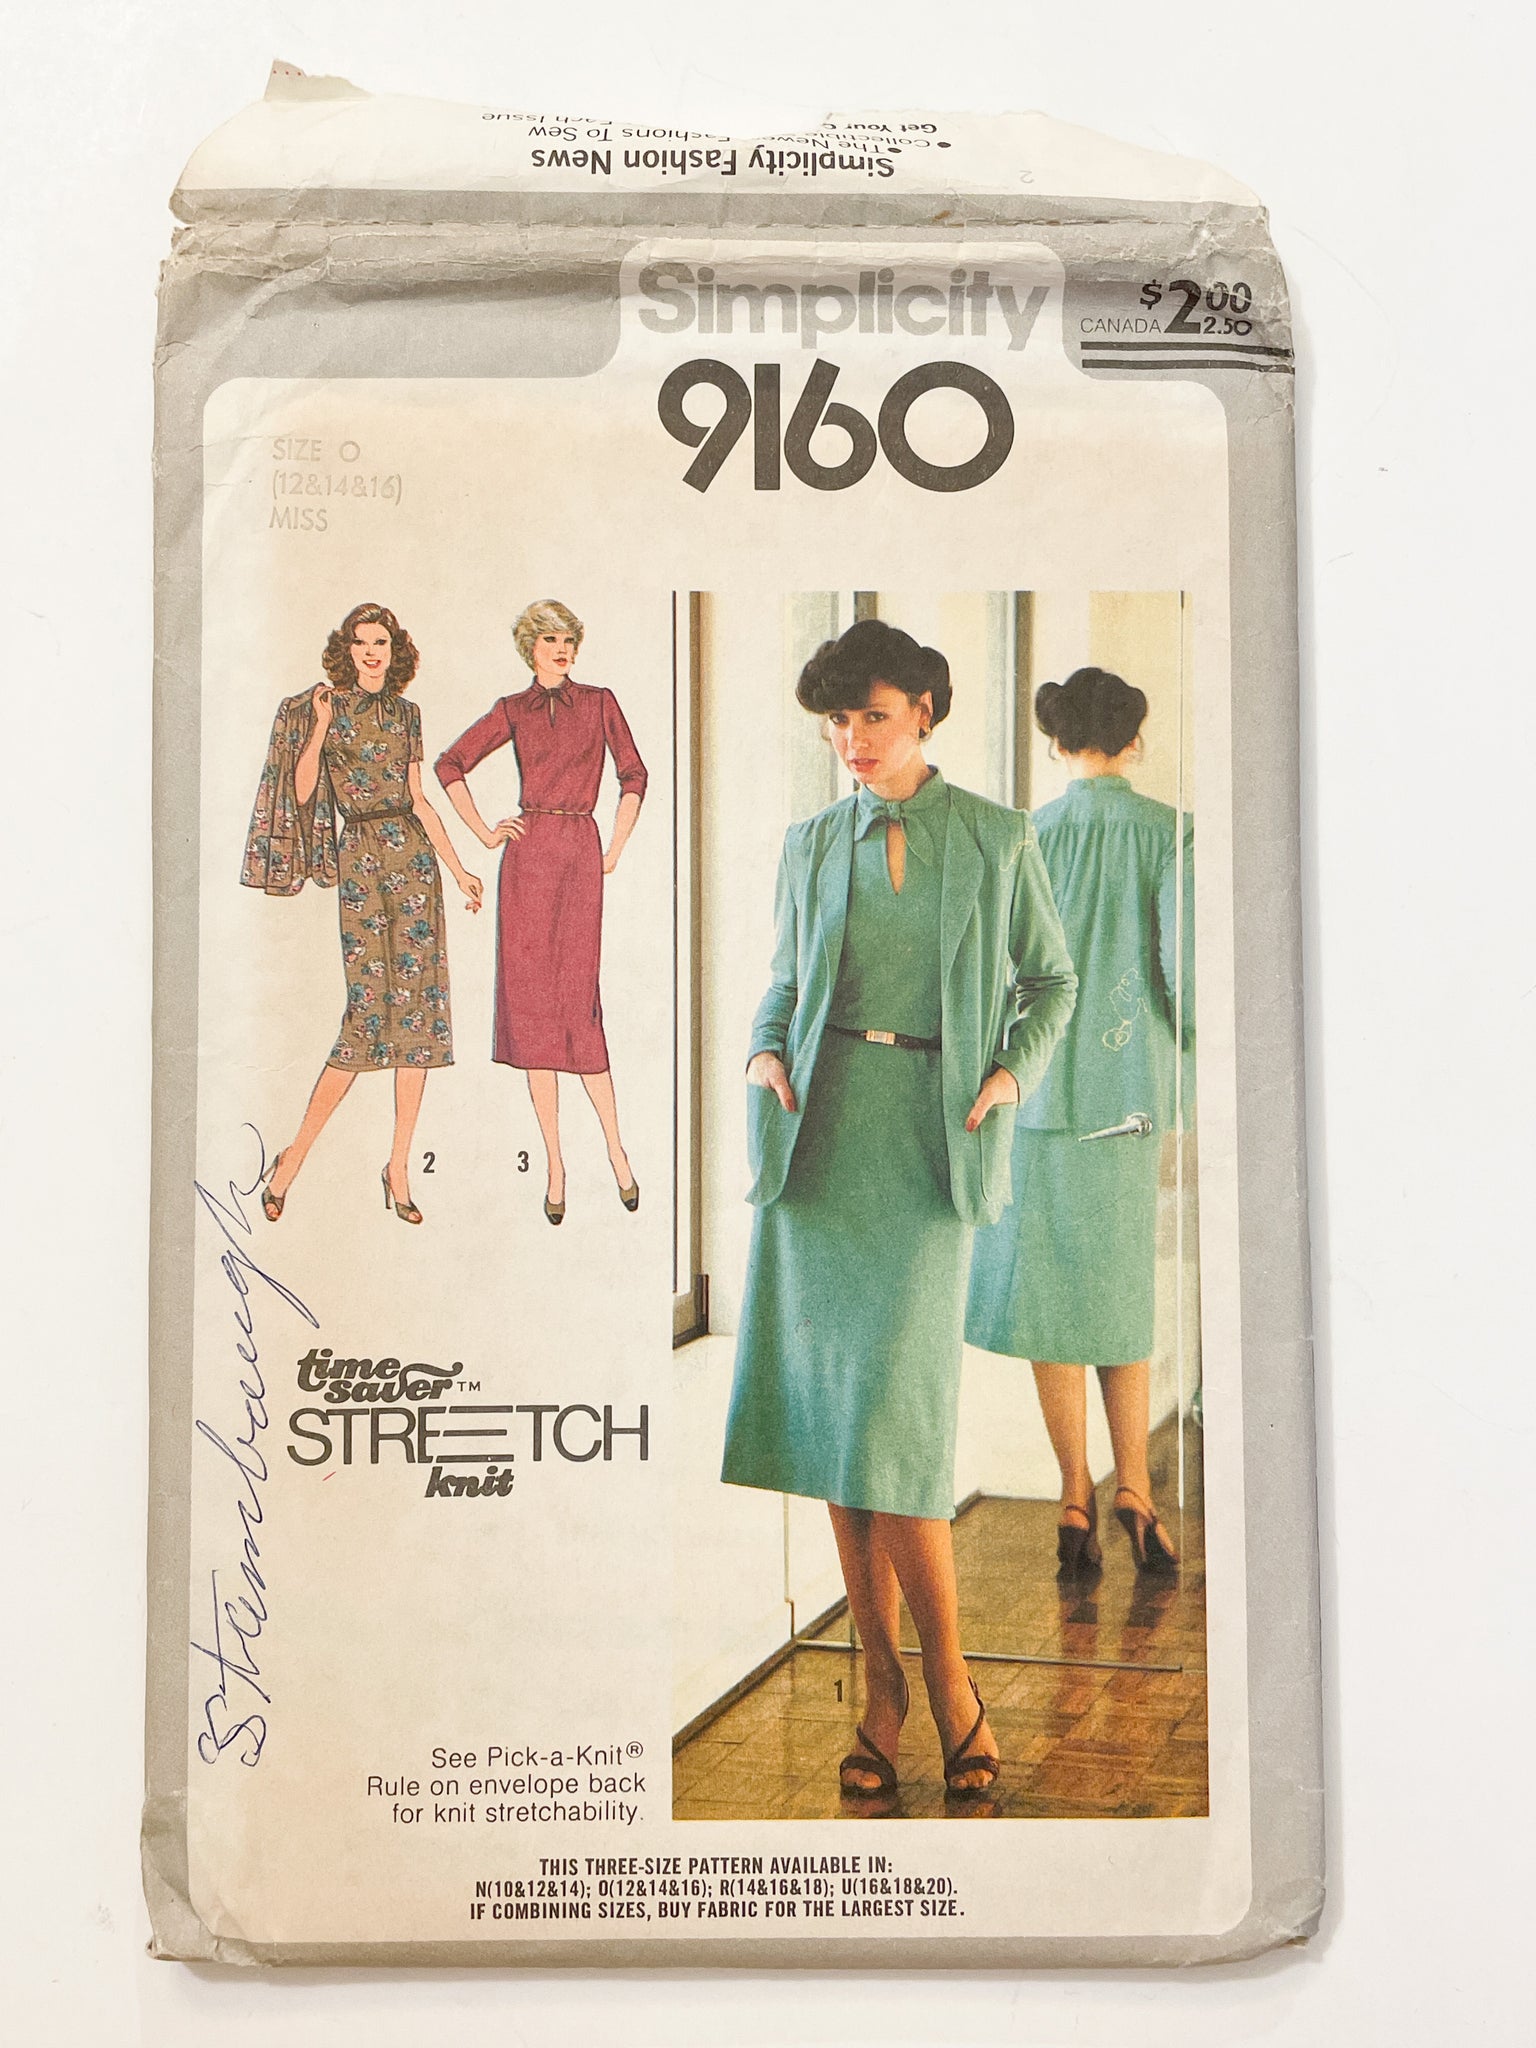 SALE 1979 Simplicity 9160 Pattern - Knit Dress and Jacket FACTORY FOLDED